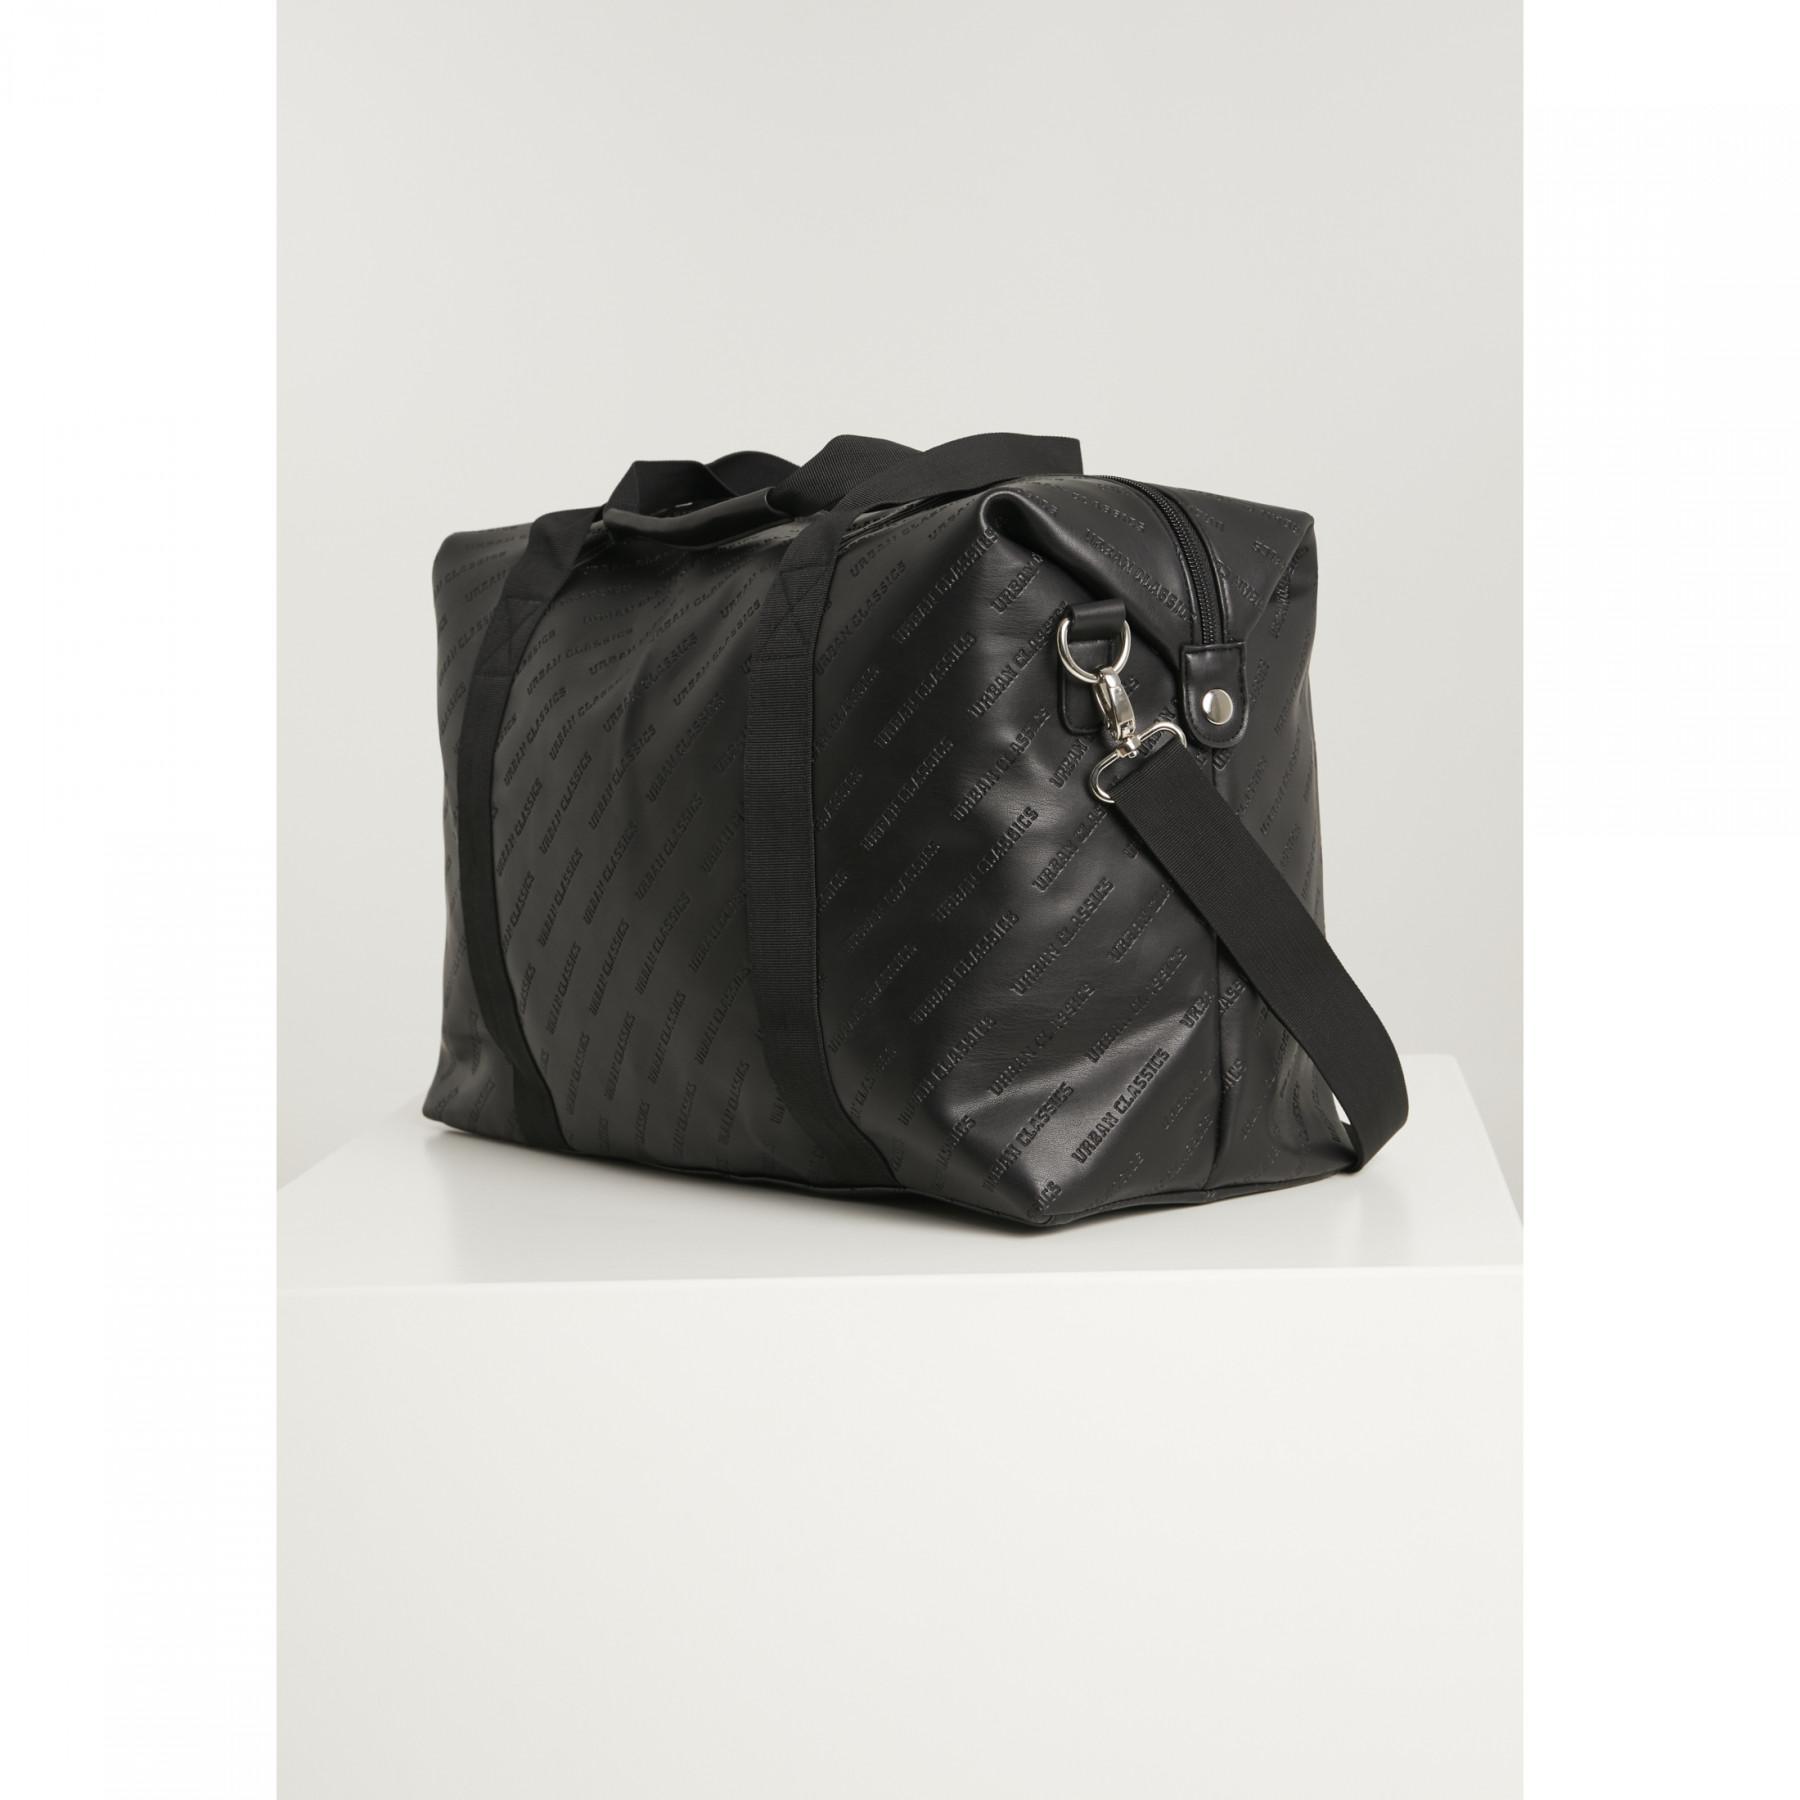 Urban Classic week leather bag